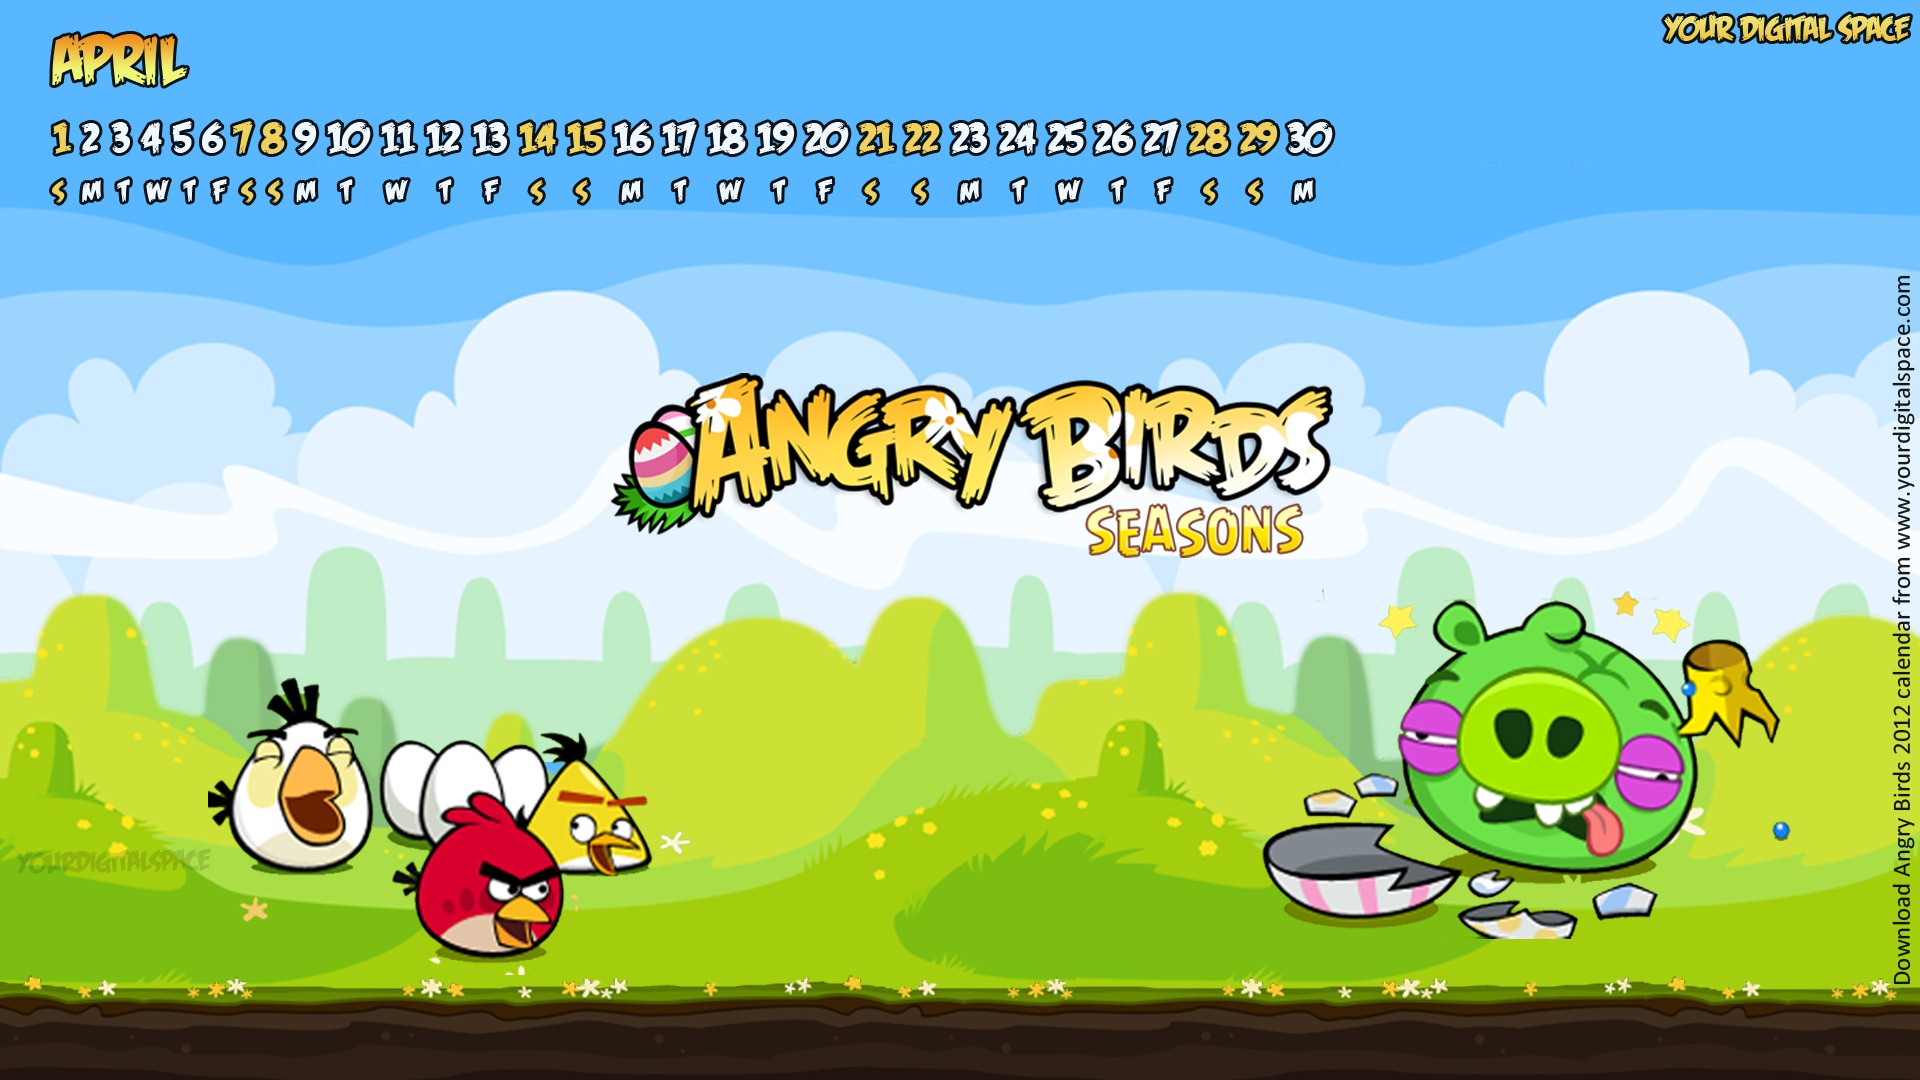 Angry Birds 愤怒的小鸟 2012年年历壁纸2 - 1920x1080